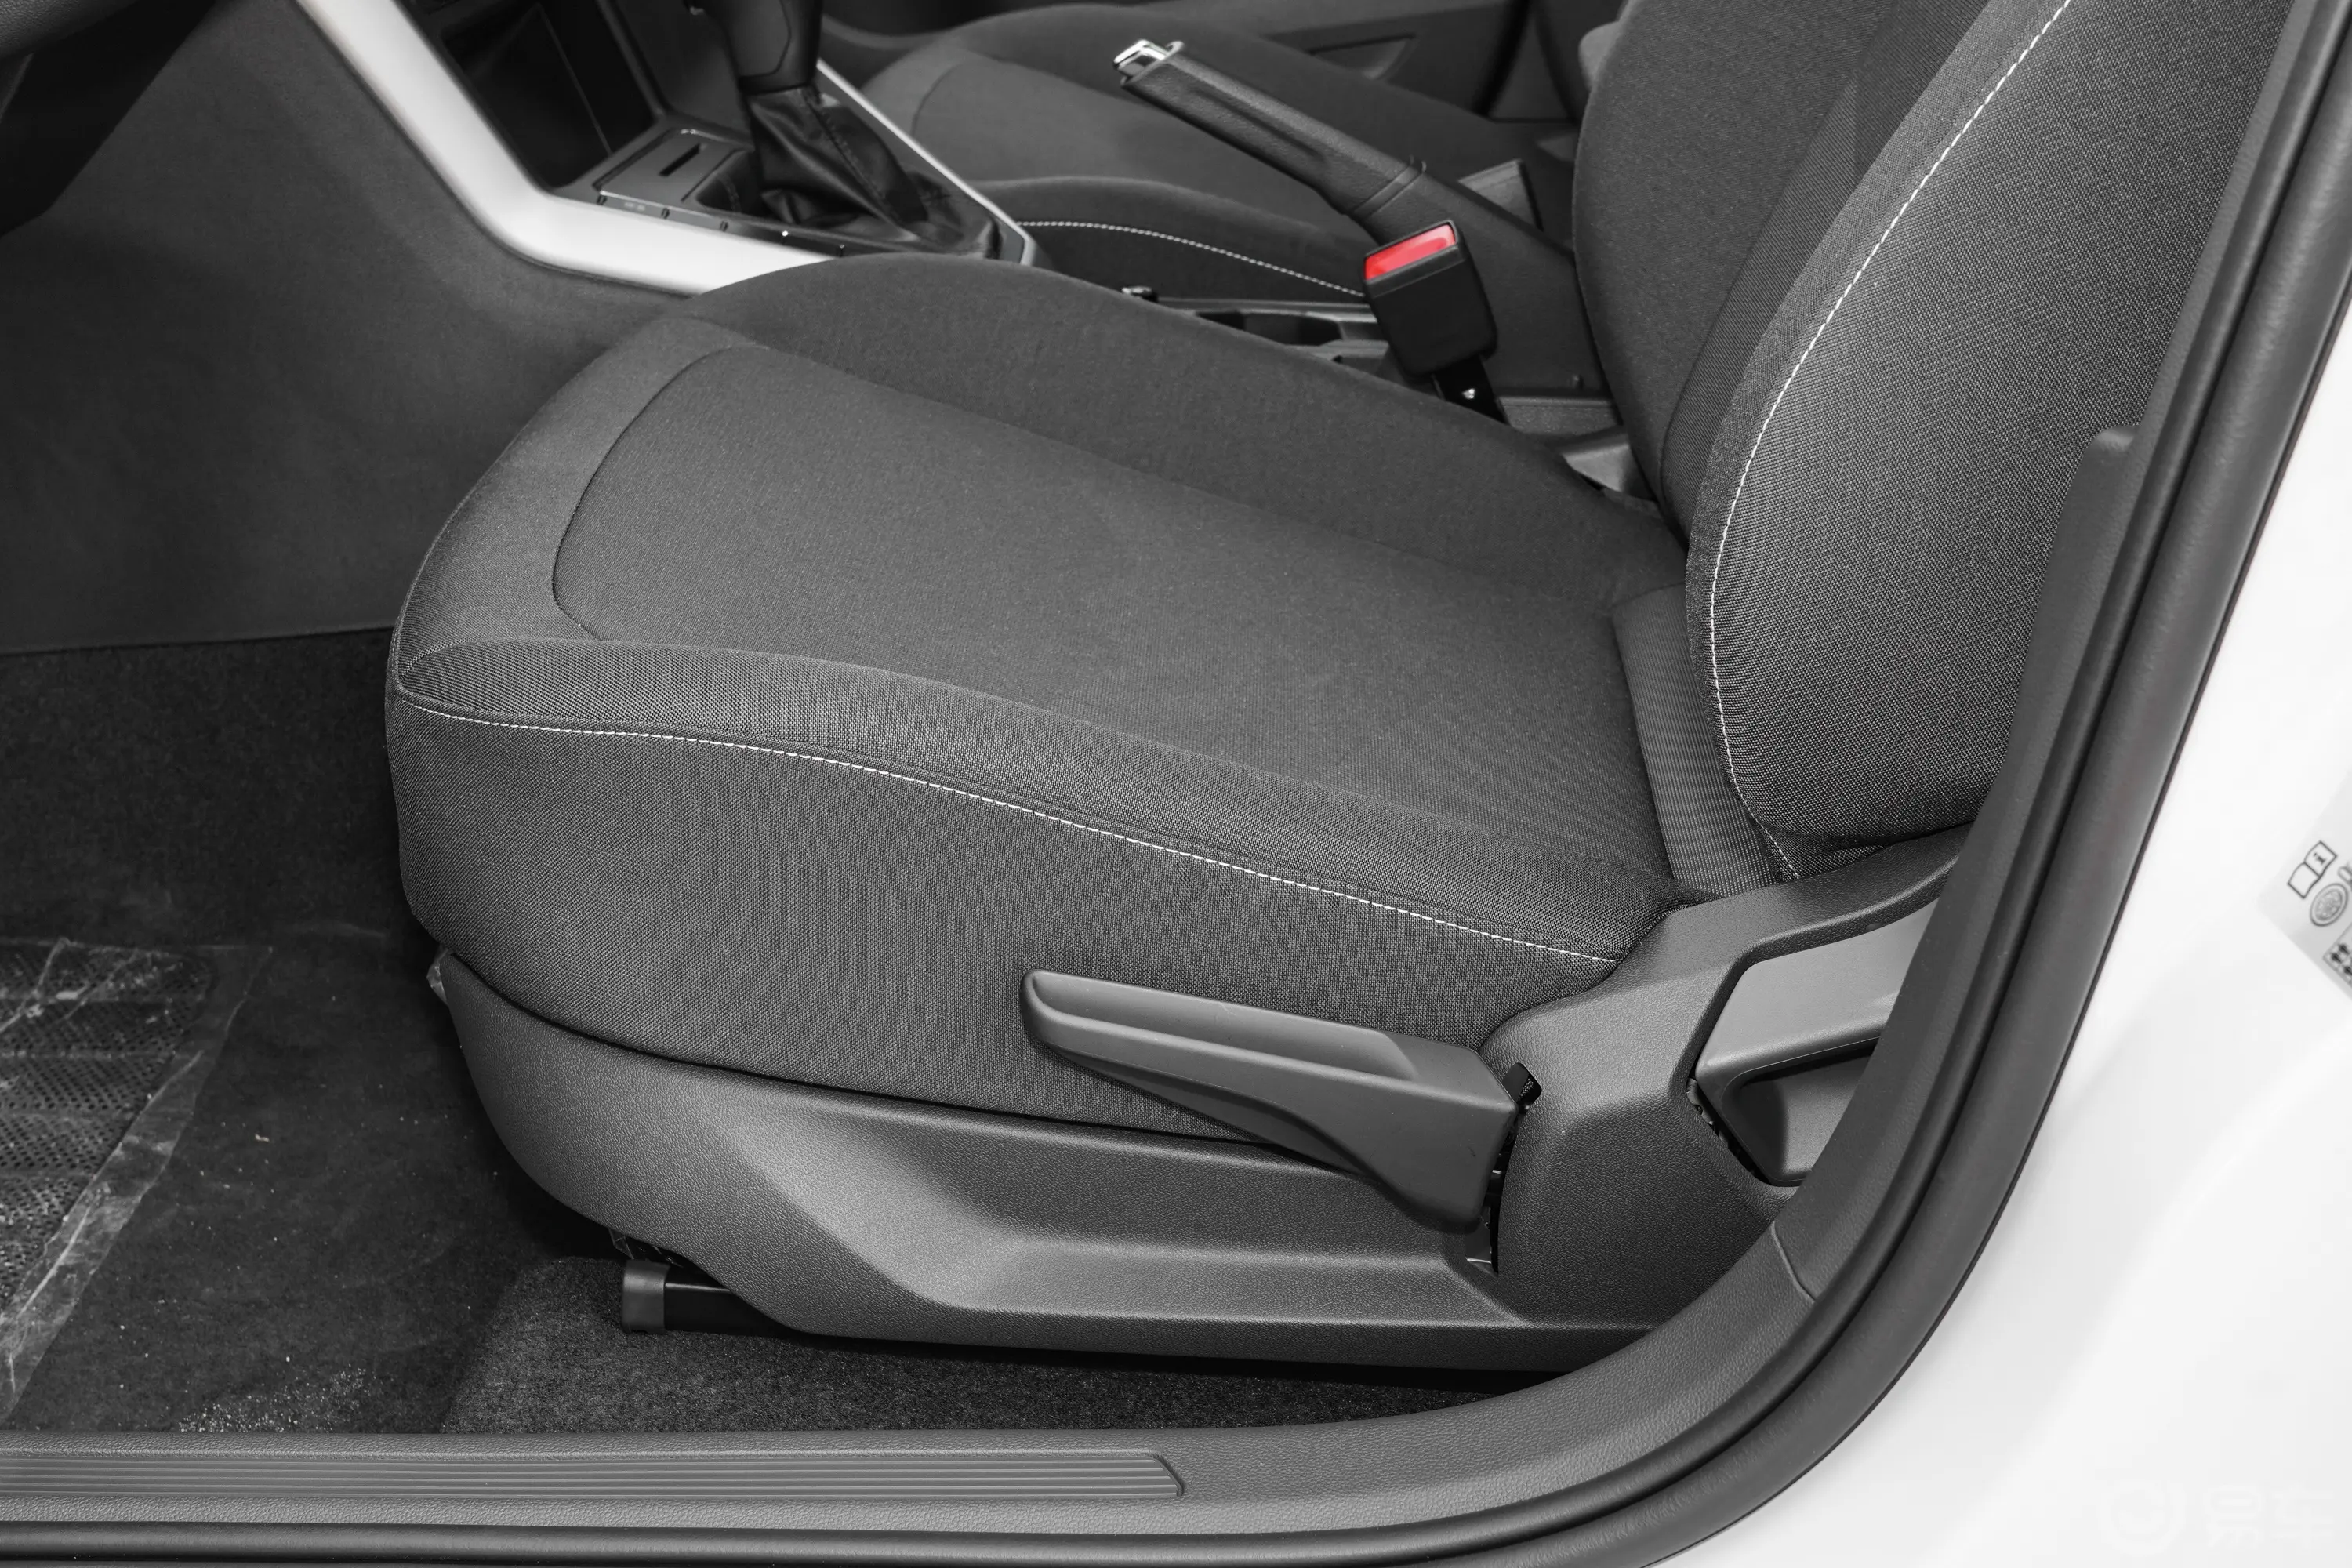 PoloPlus 1.5L 自动全景乐享版主驾座椅调节